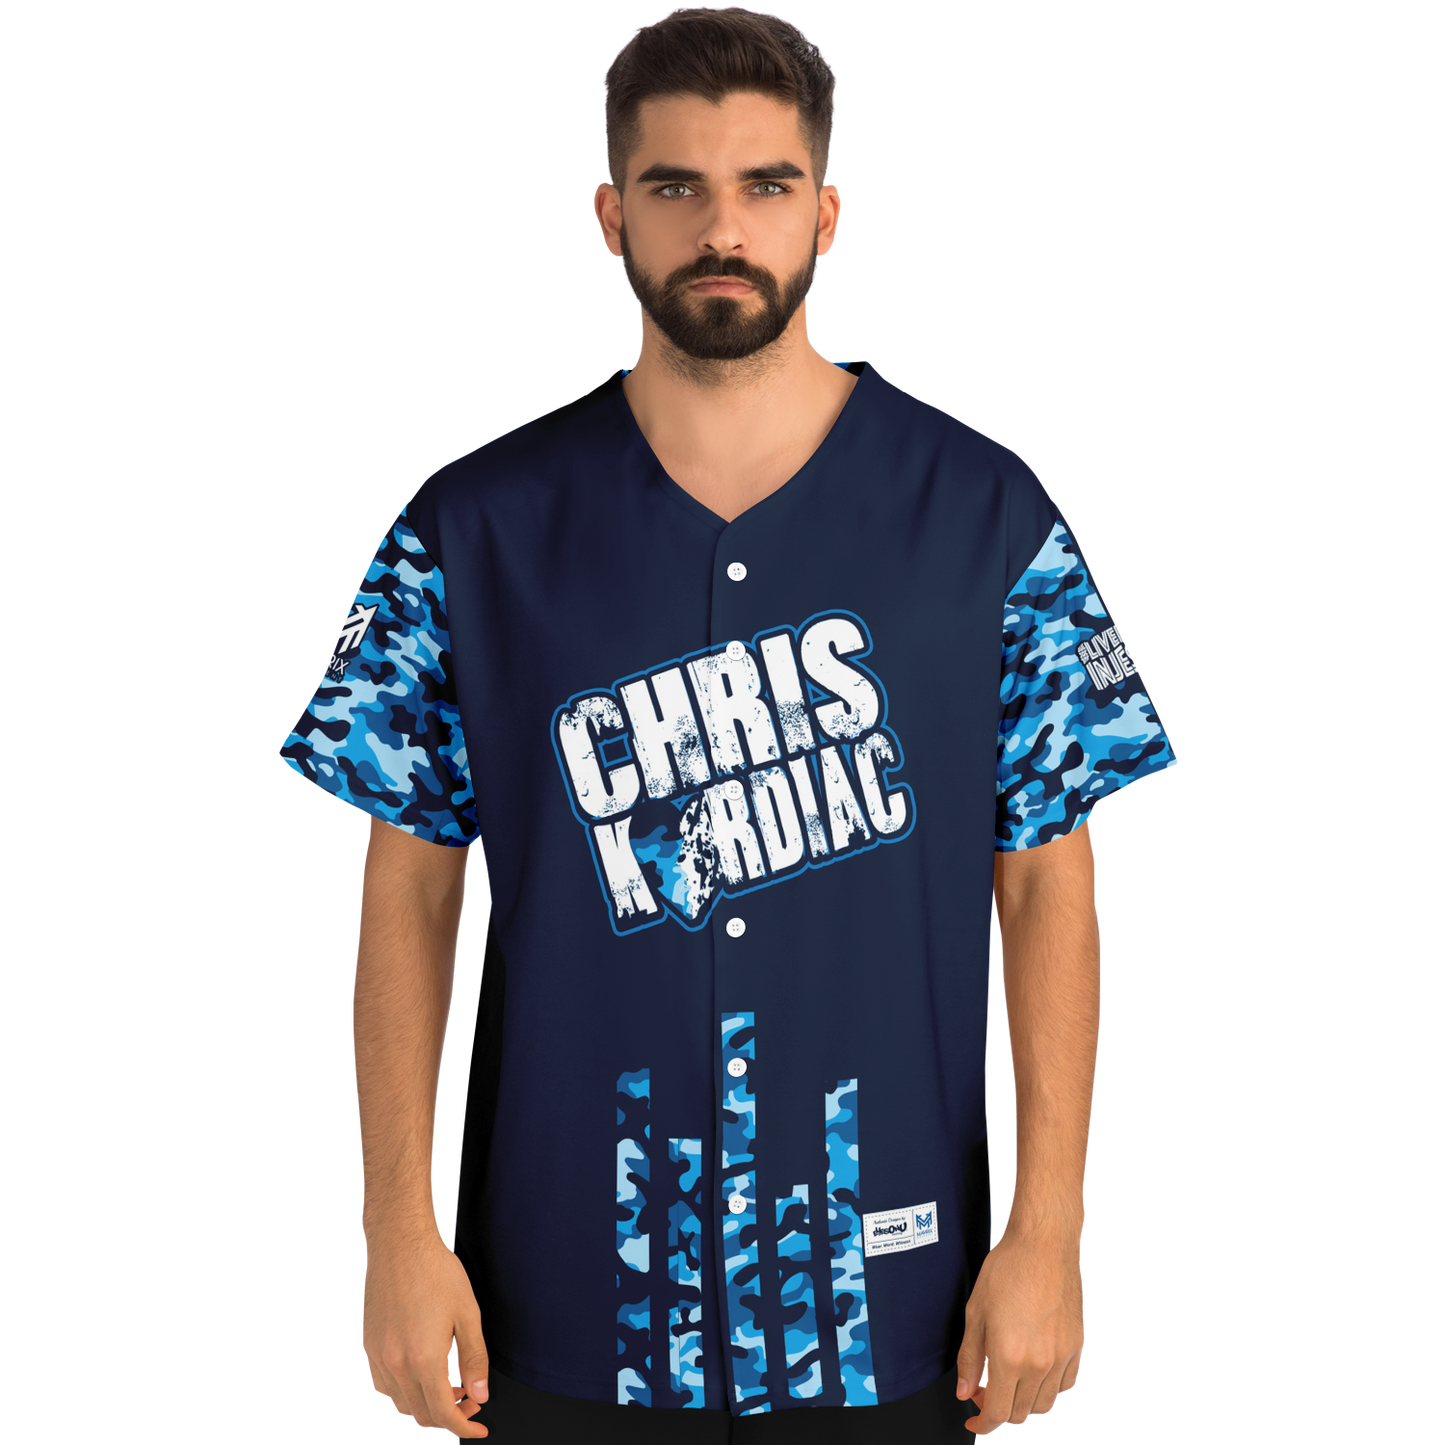 Mavrix Chris Kardiac Blue Camo Baseball Jersey